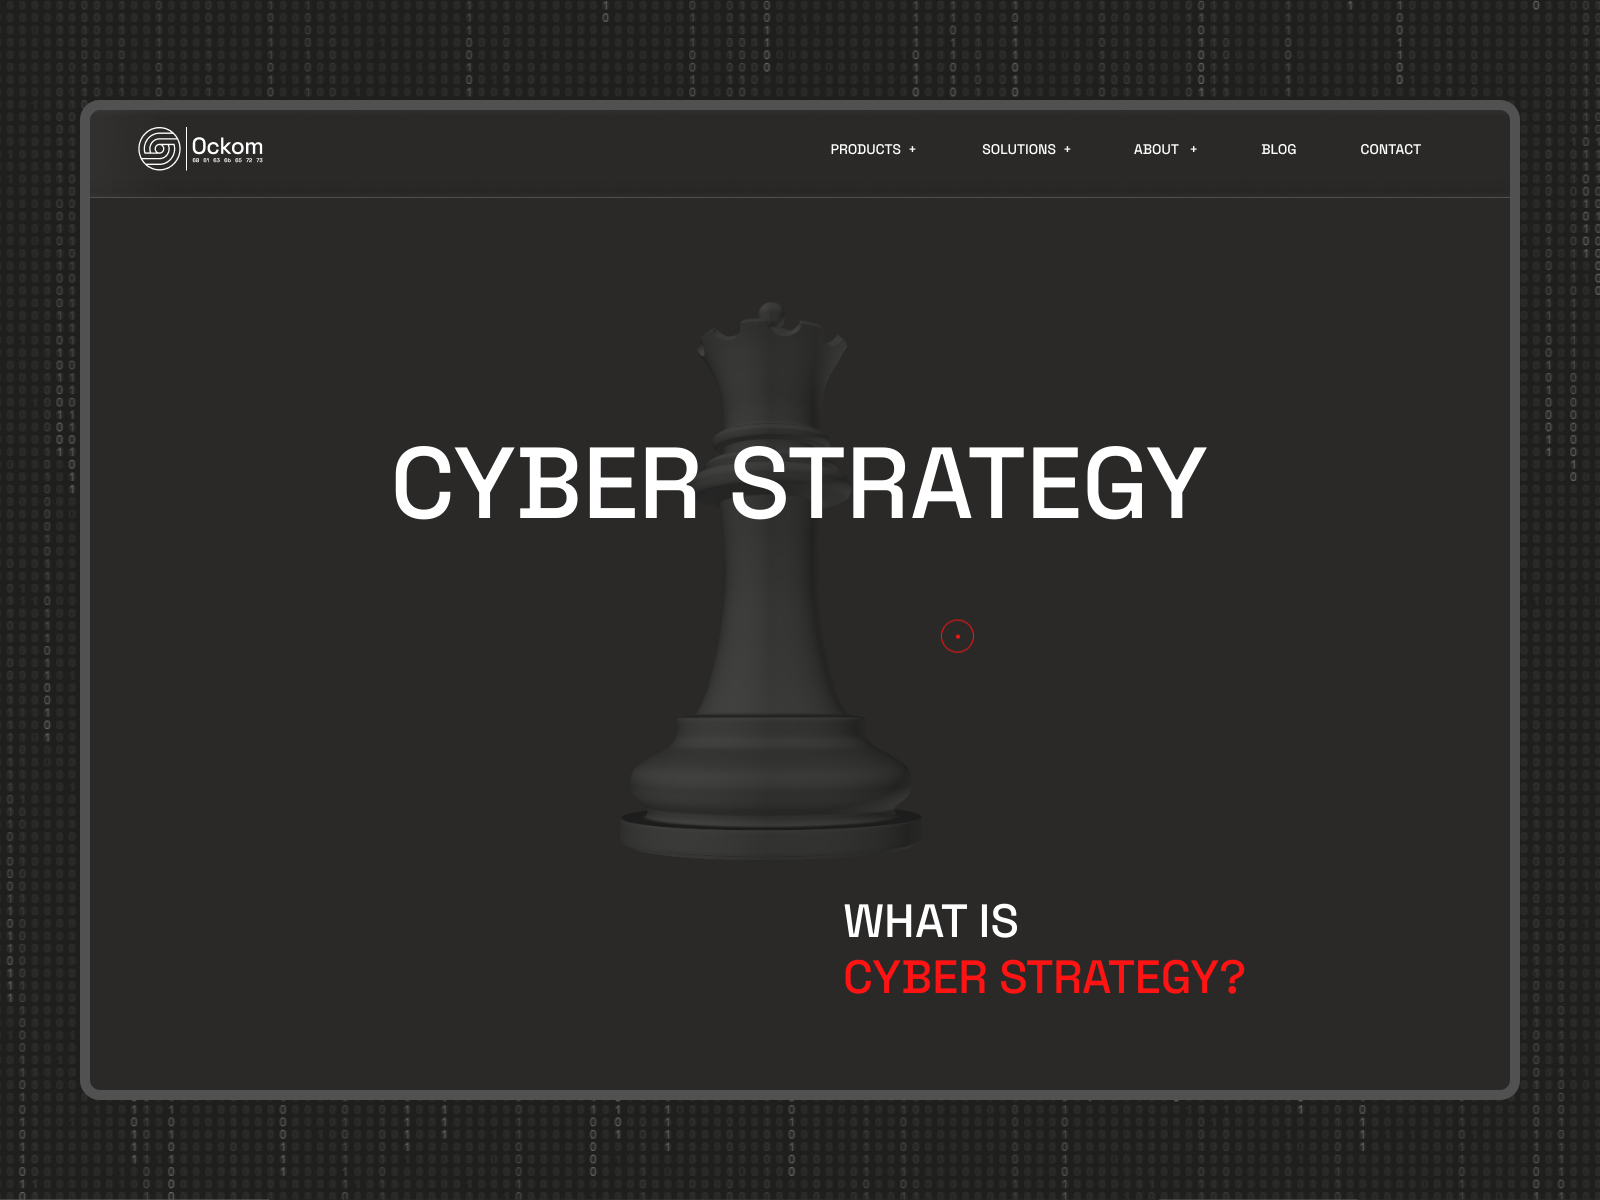 Cyber strategy